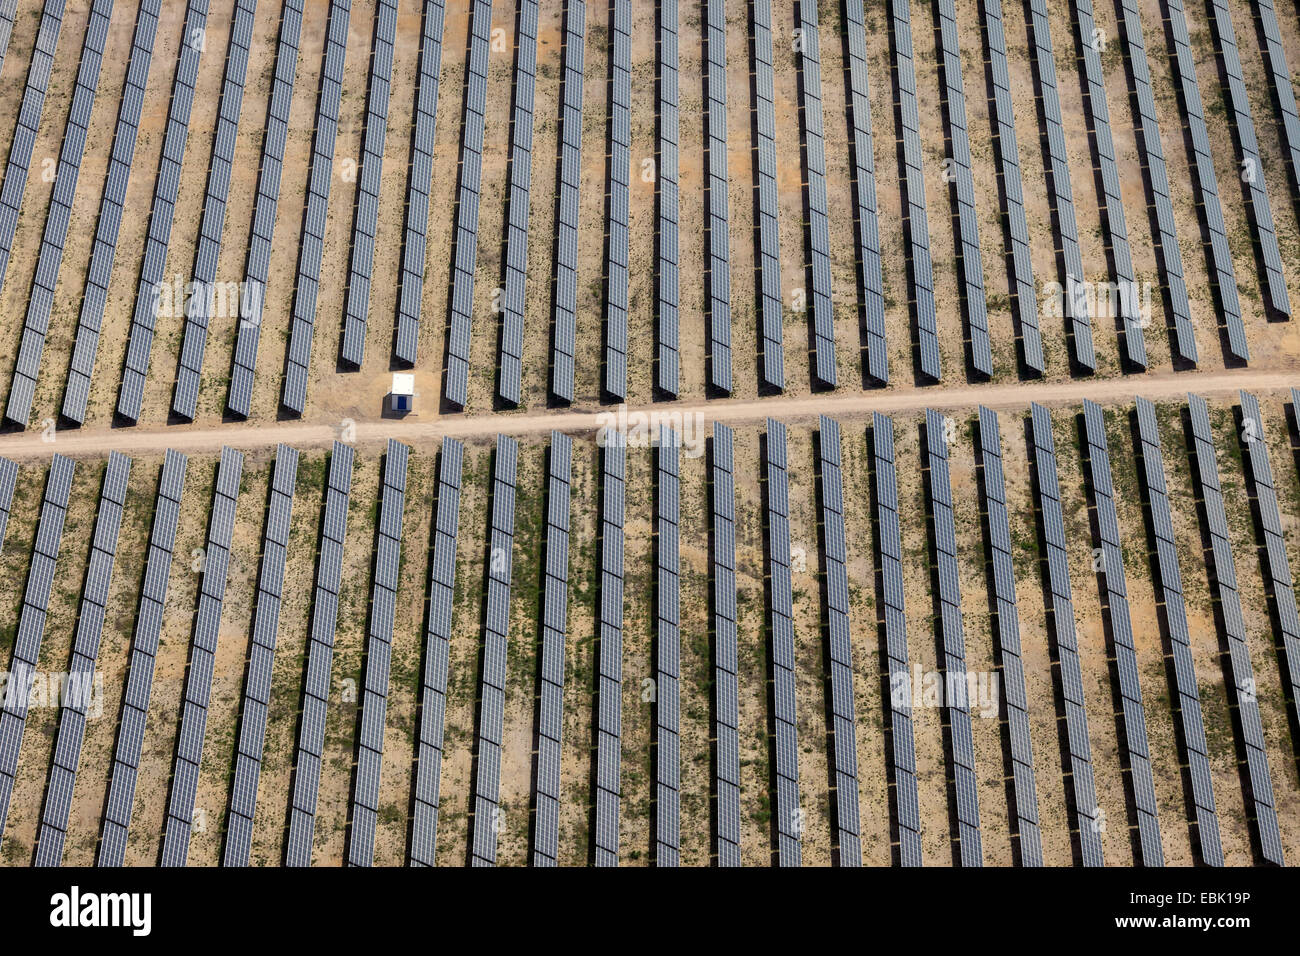 Sunselex energia solare sistemi, Solaranlage Turnow, Germania, il Land Brandeburgo Foto Stock